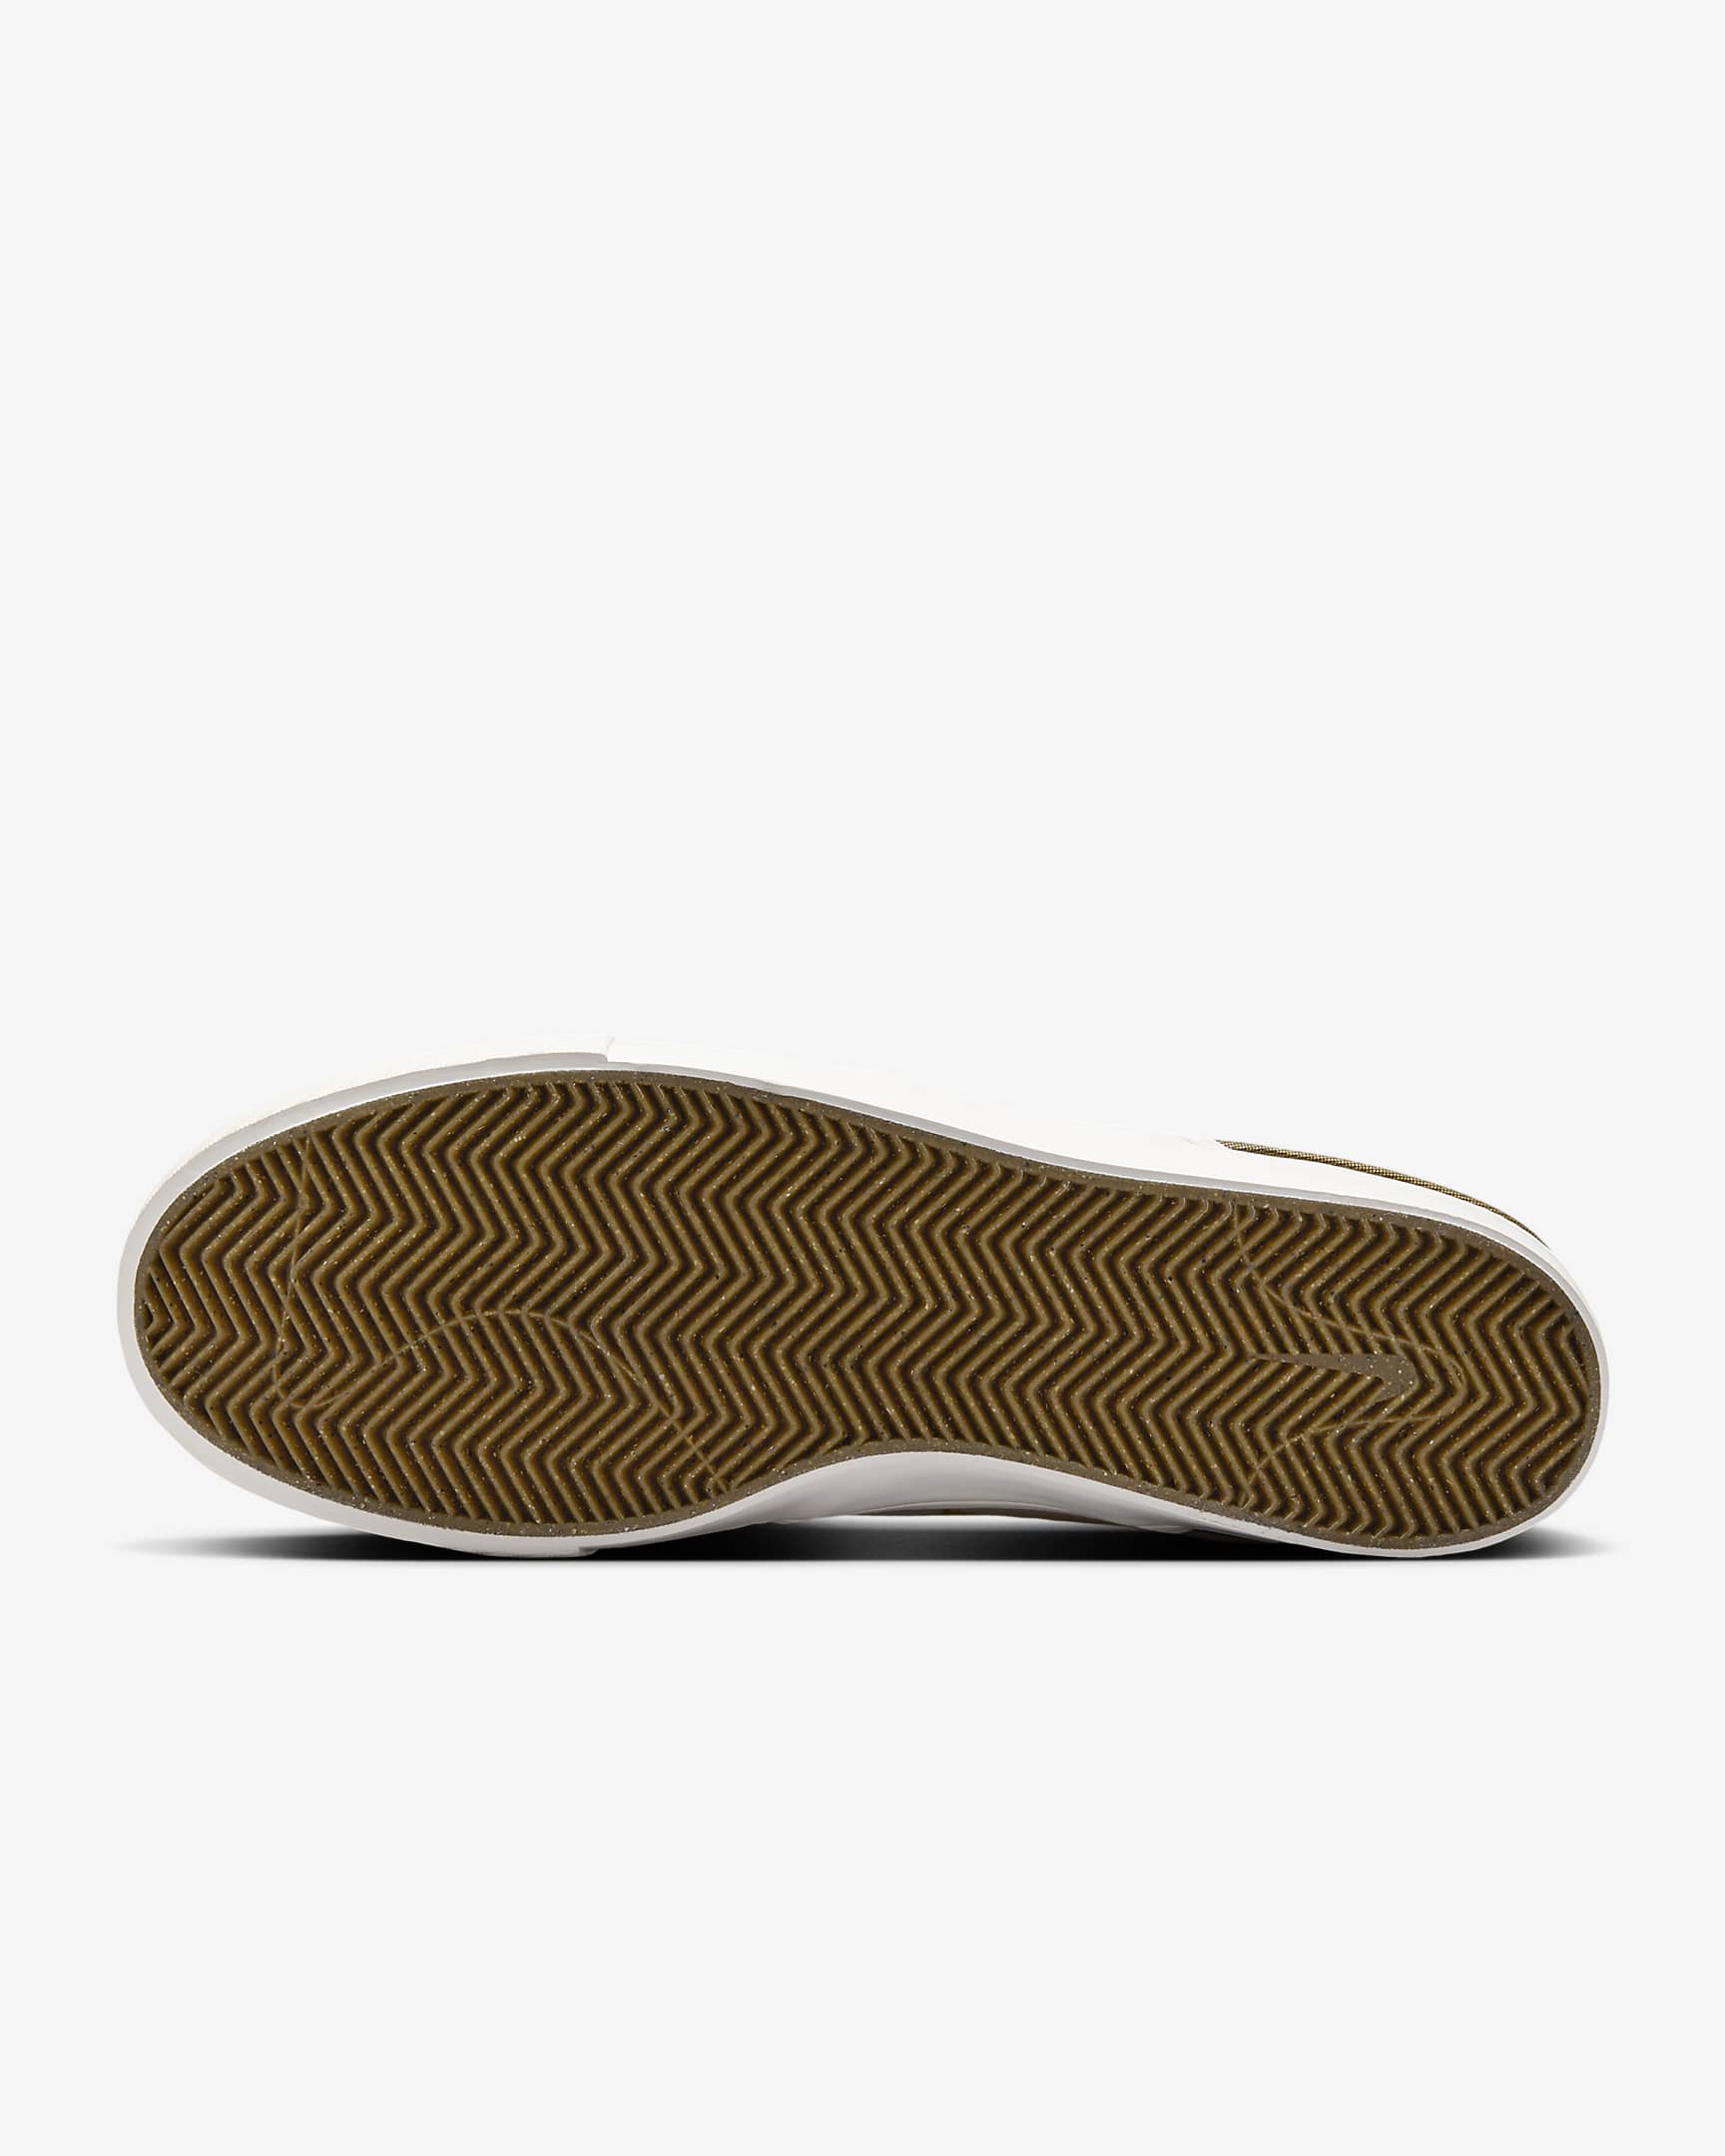 Nike SB Zoom Janoski OG+ Premium Skateboardschuh